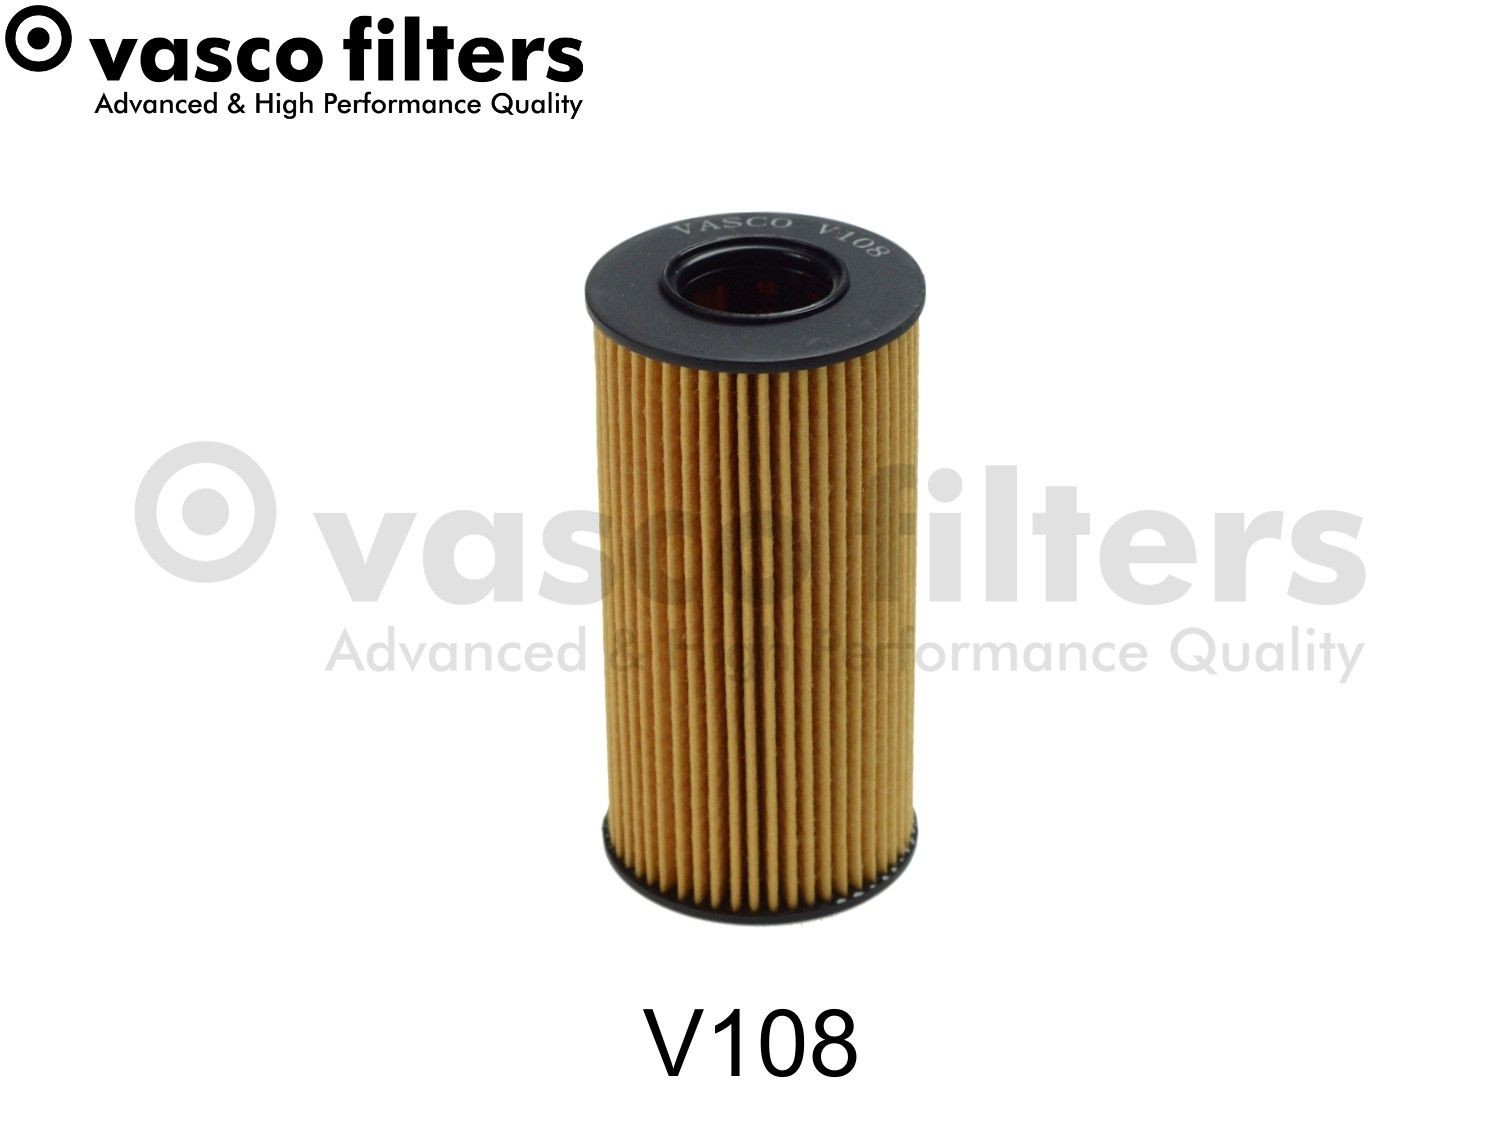 Original DAVID VASCO Oil filters V108 for RENAULT MEGANE